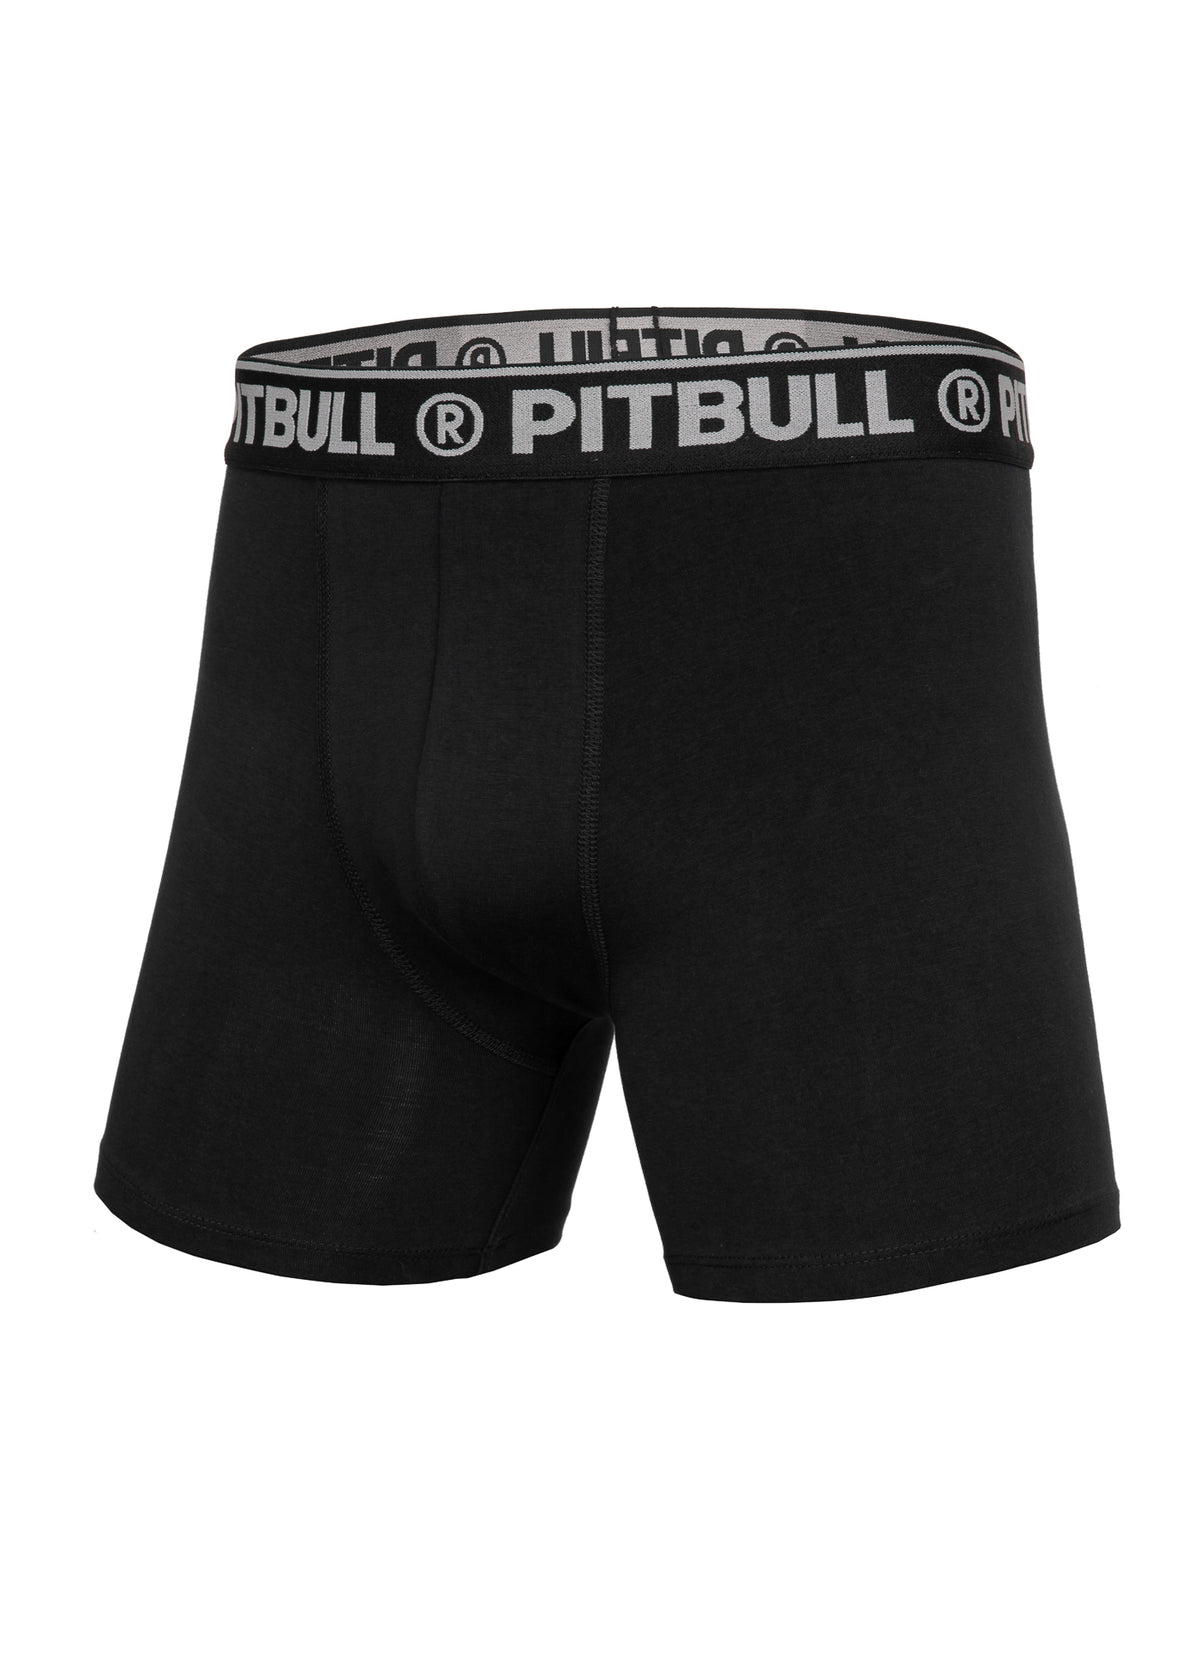 3pack Black Boxer Shorts.